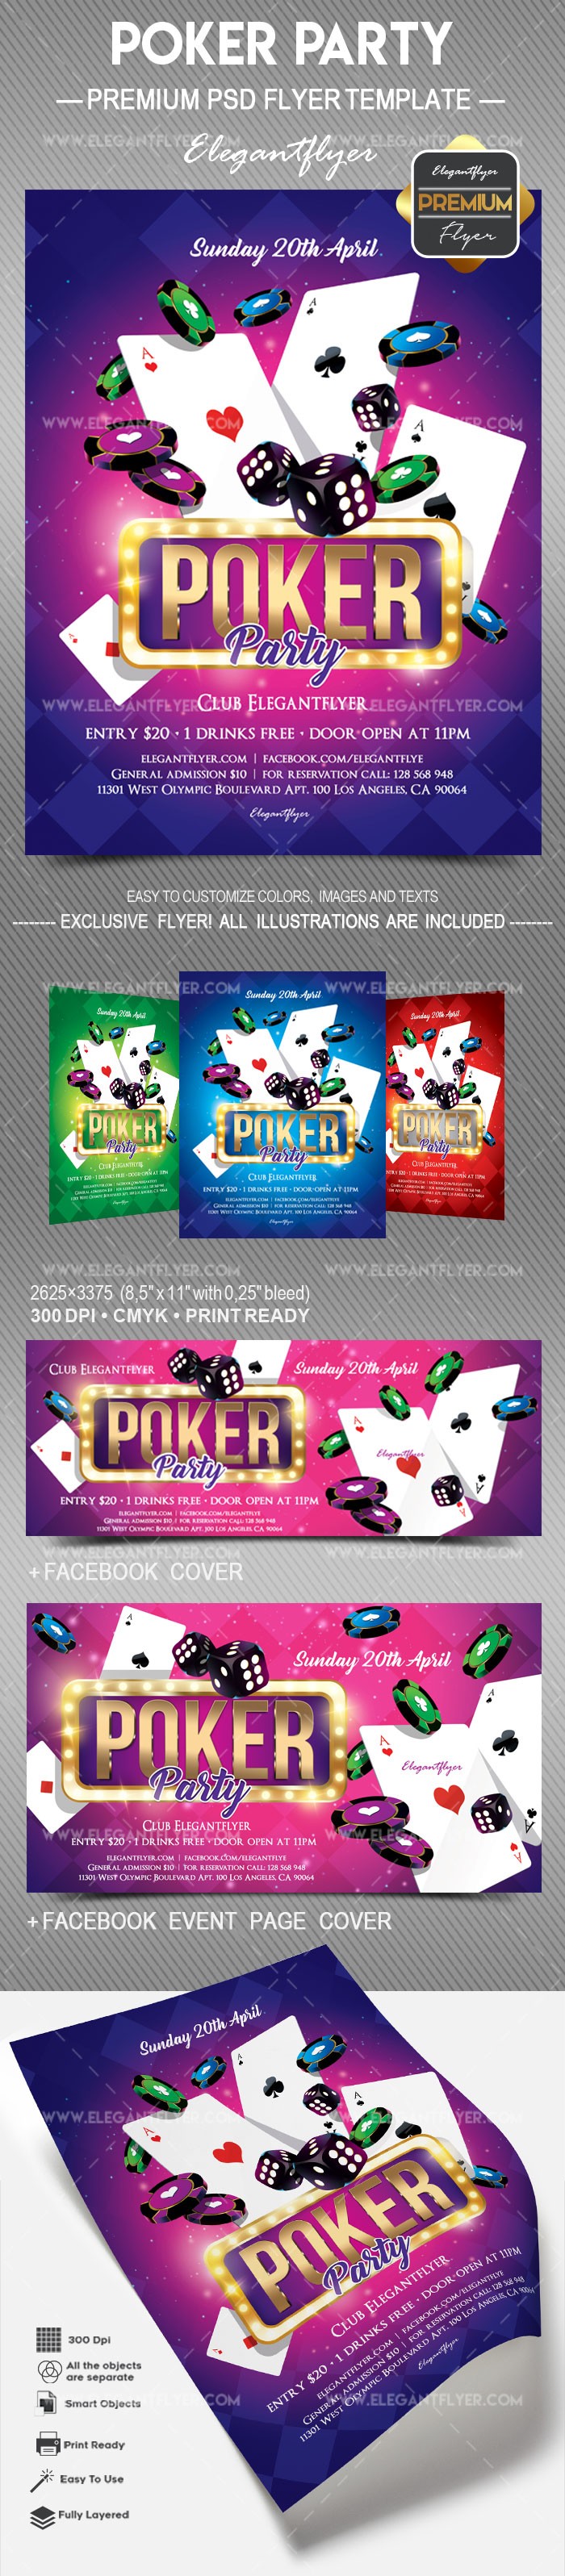 Poker Party --> Pokernacht by ElegantFlyer